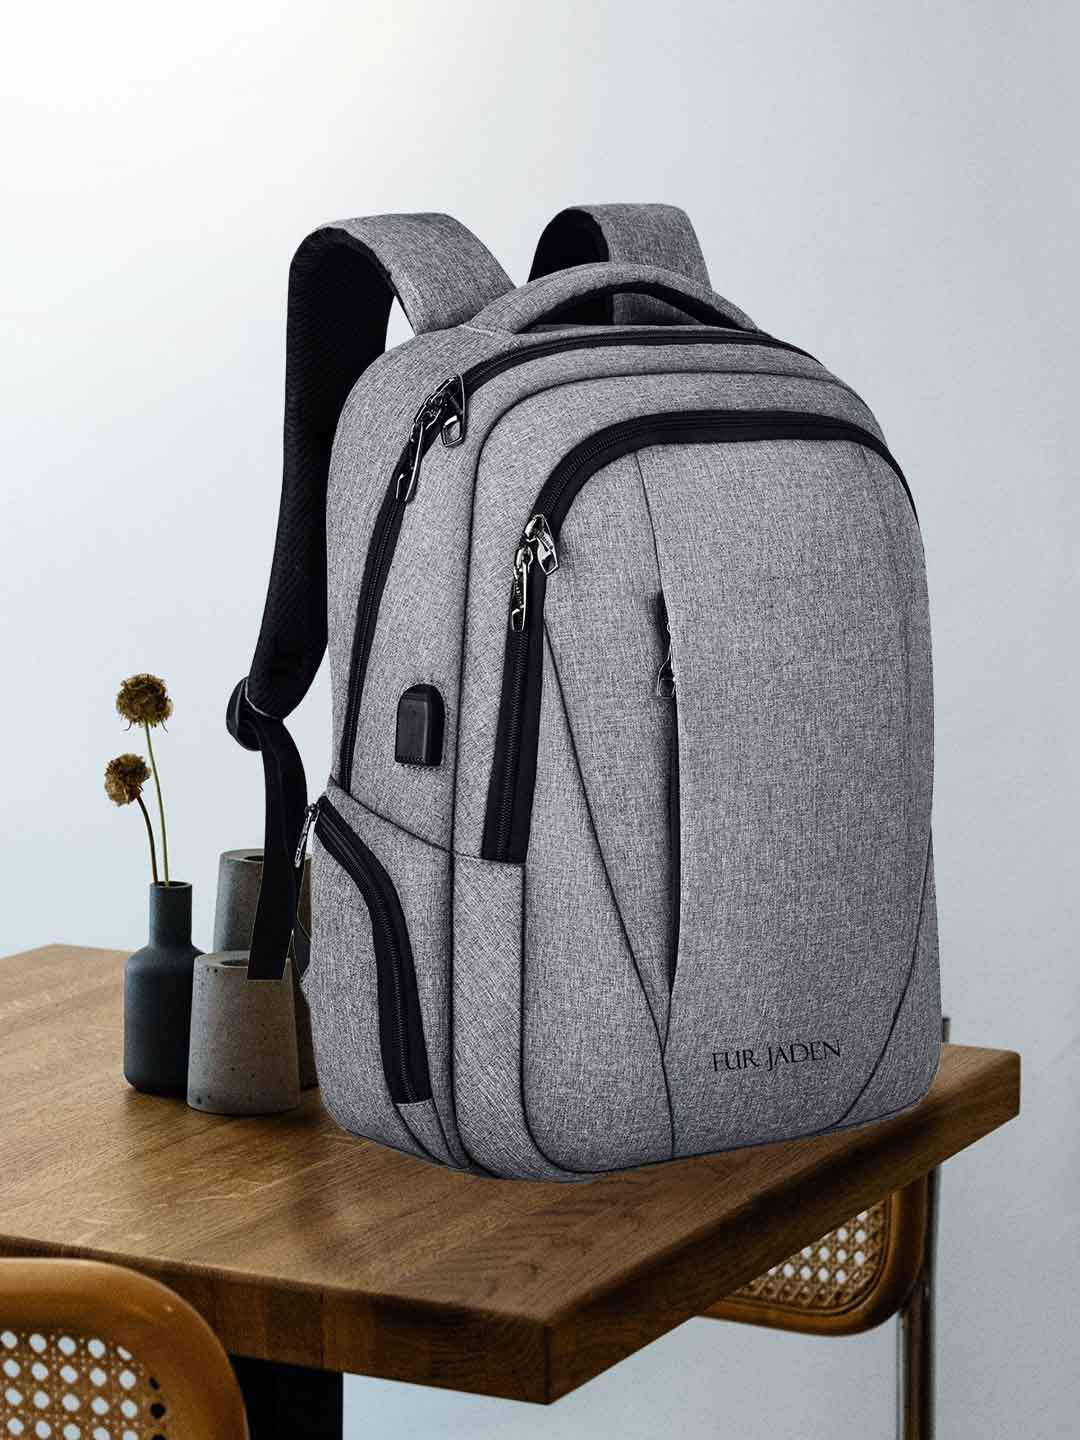 Base Shaper Bag, Accessorie Bags, Support Pad, Prop Bag